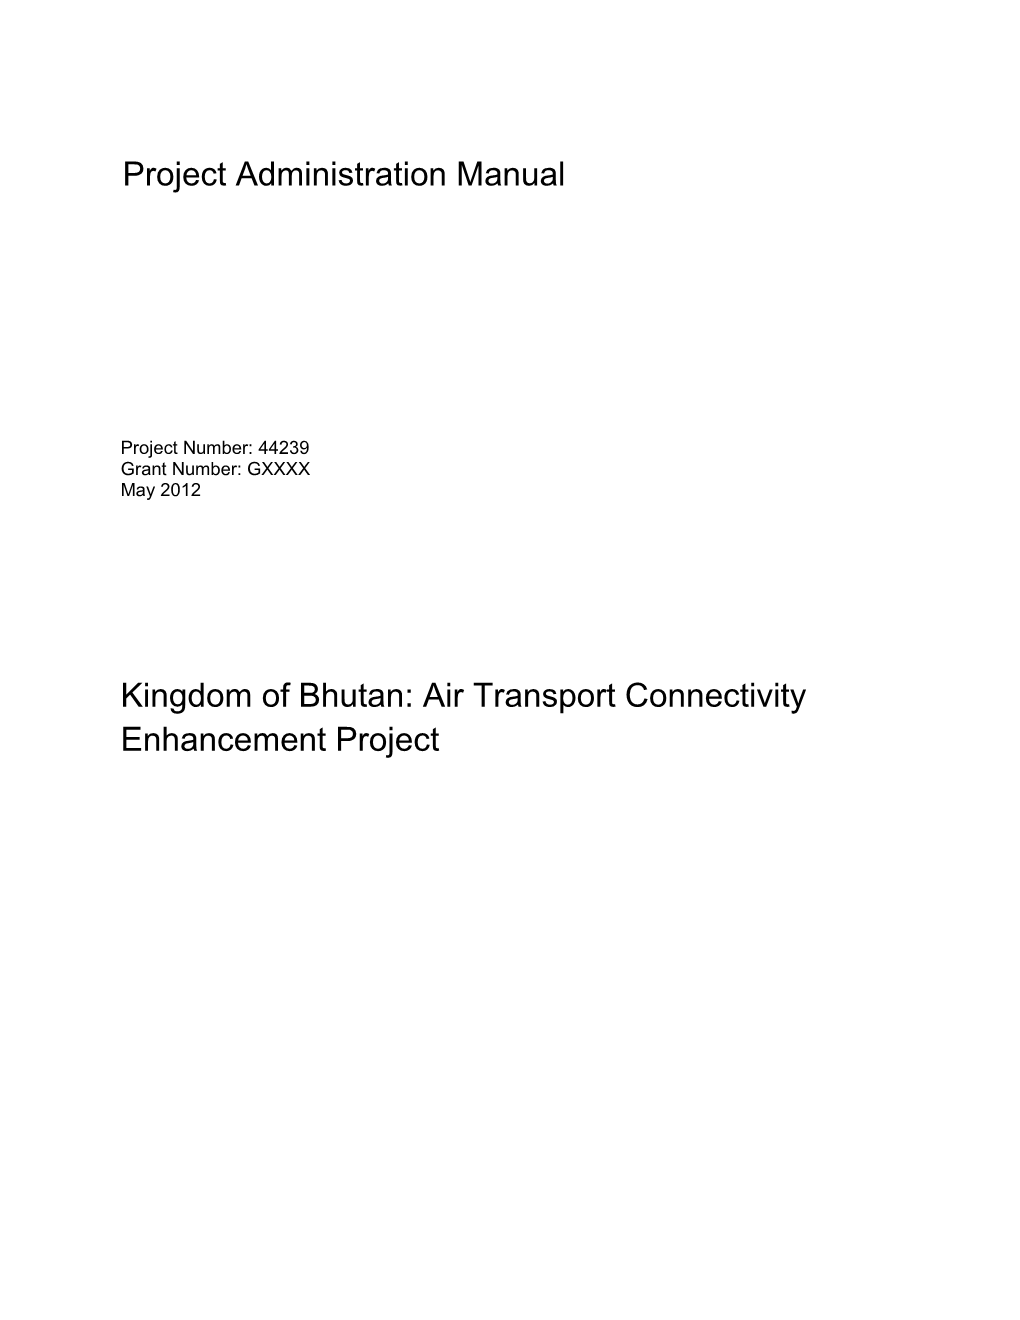 Bhutan: Air Transport Connectivity Enhancement Project